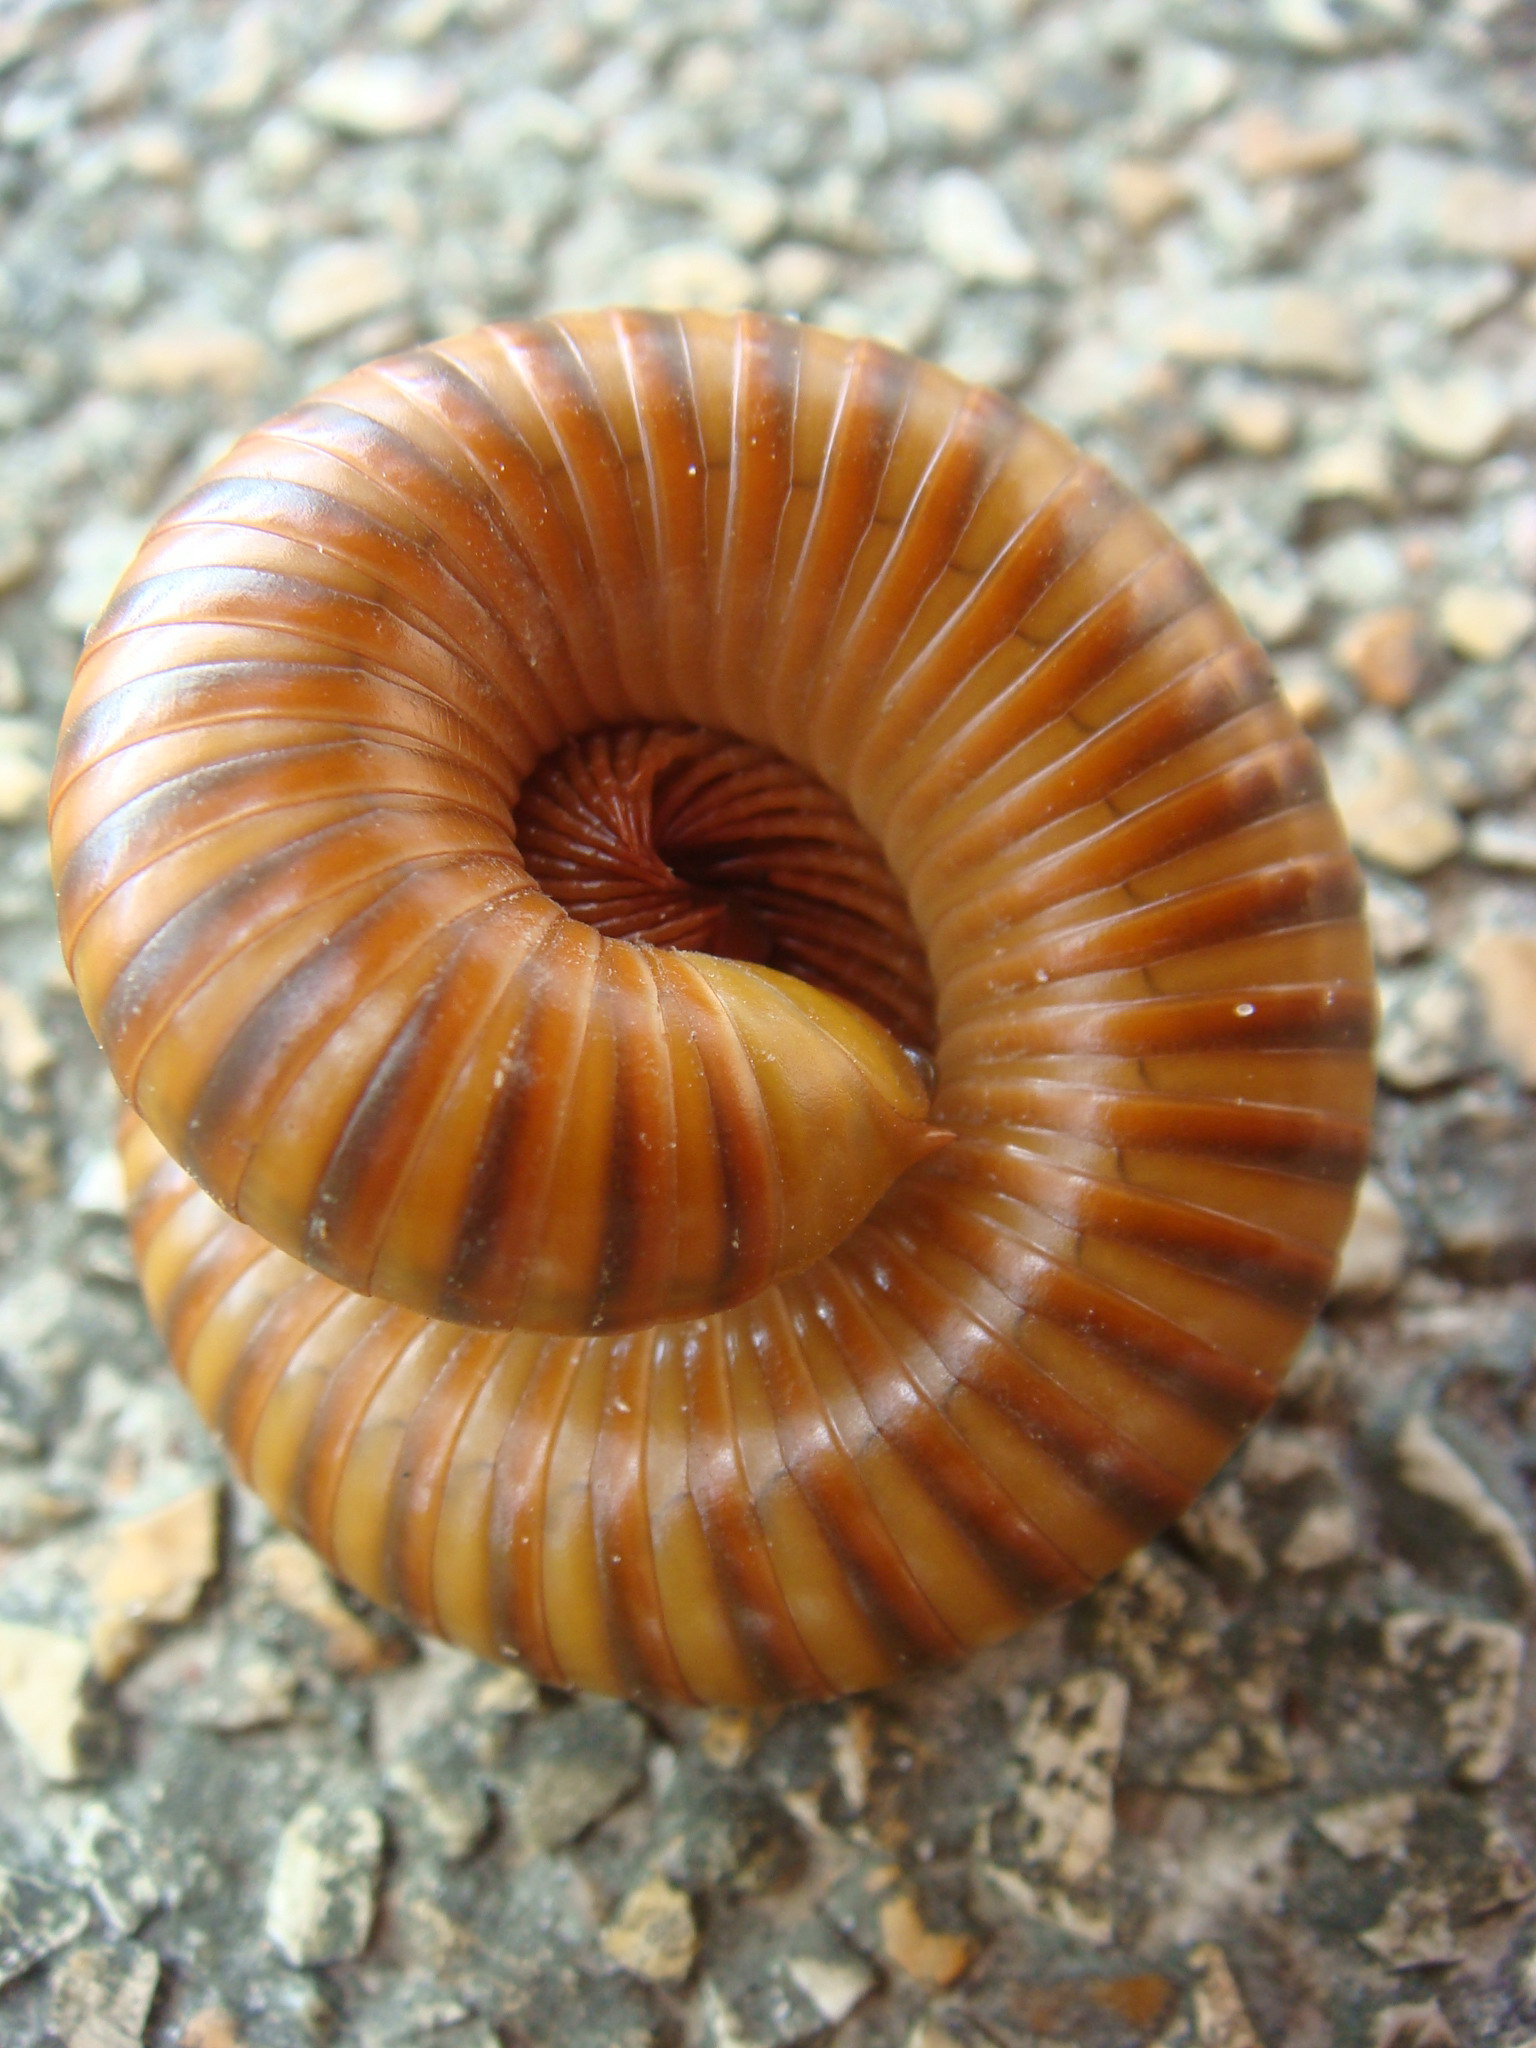 a close up of a large orange animal on ground